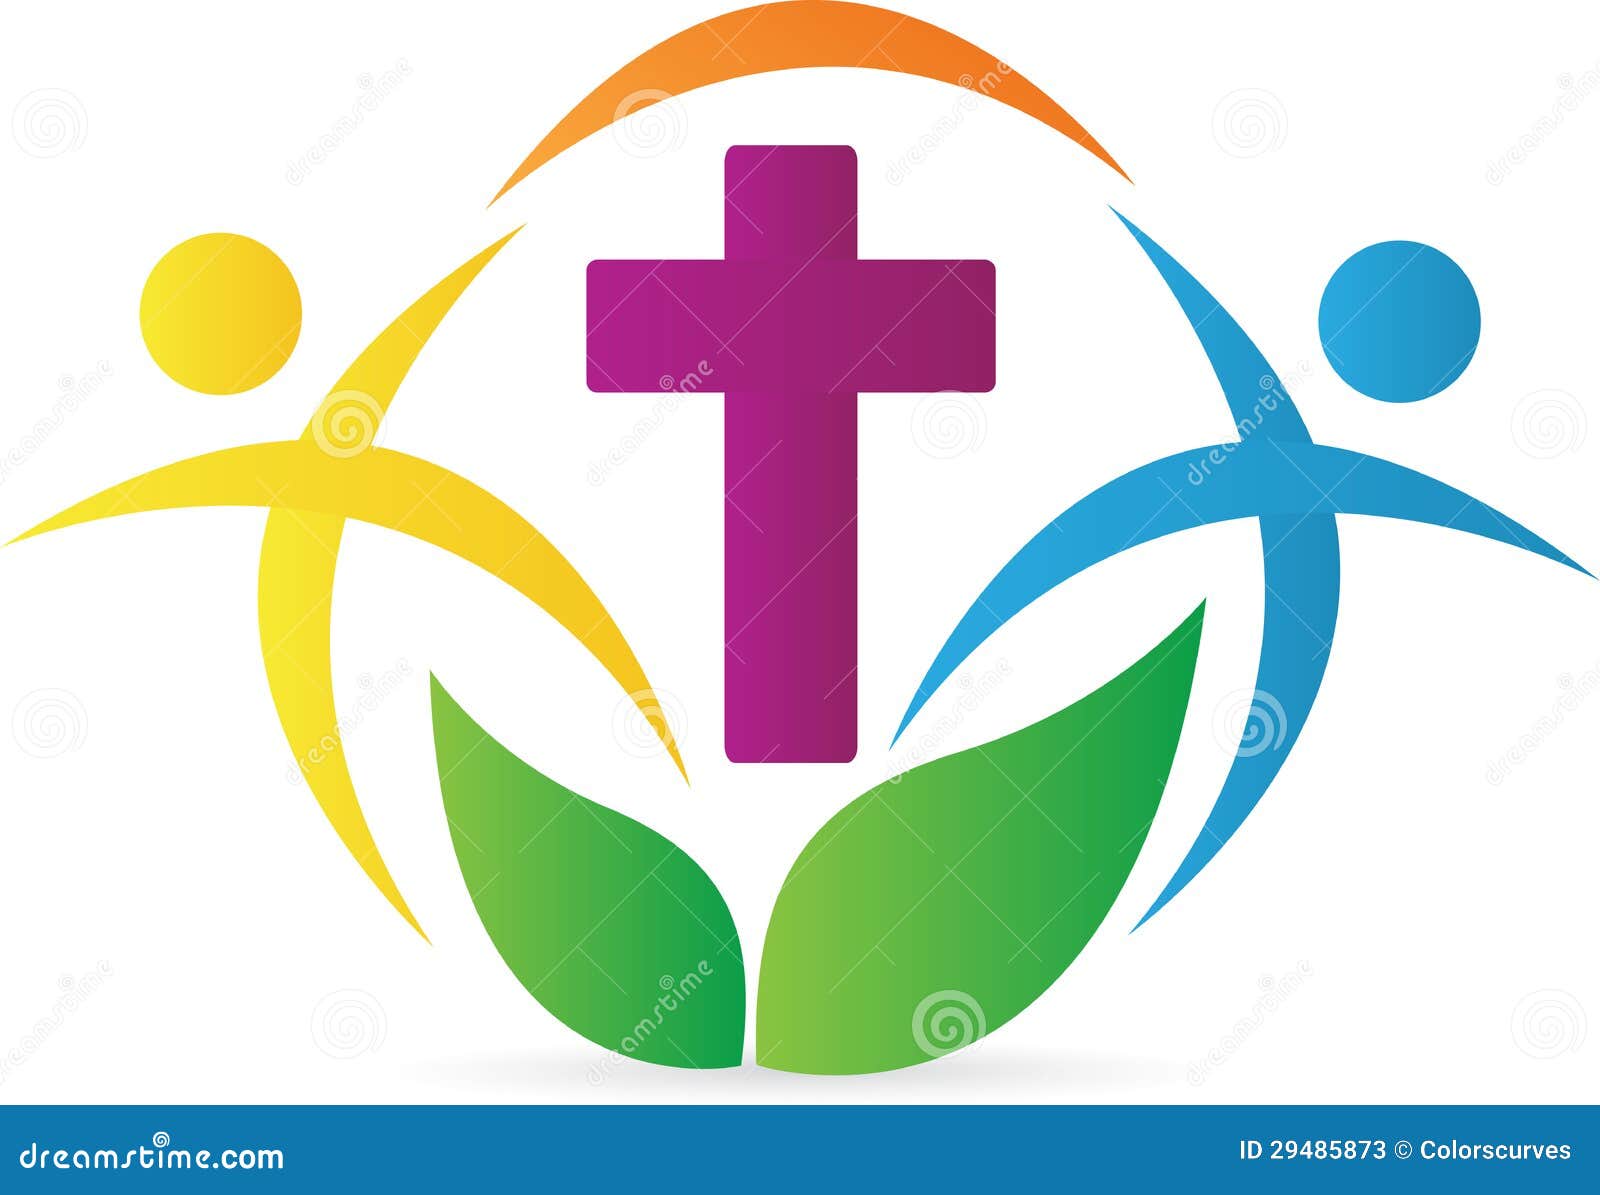 free christian logo clip art - photo #33